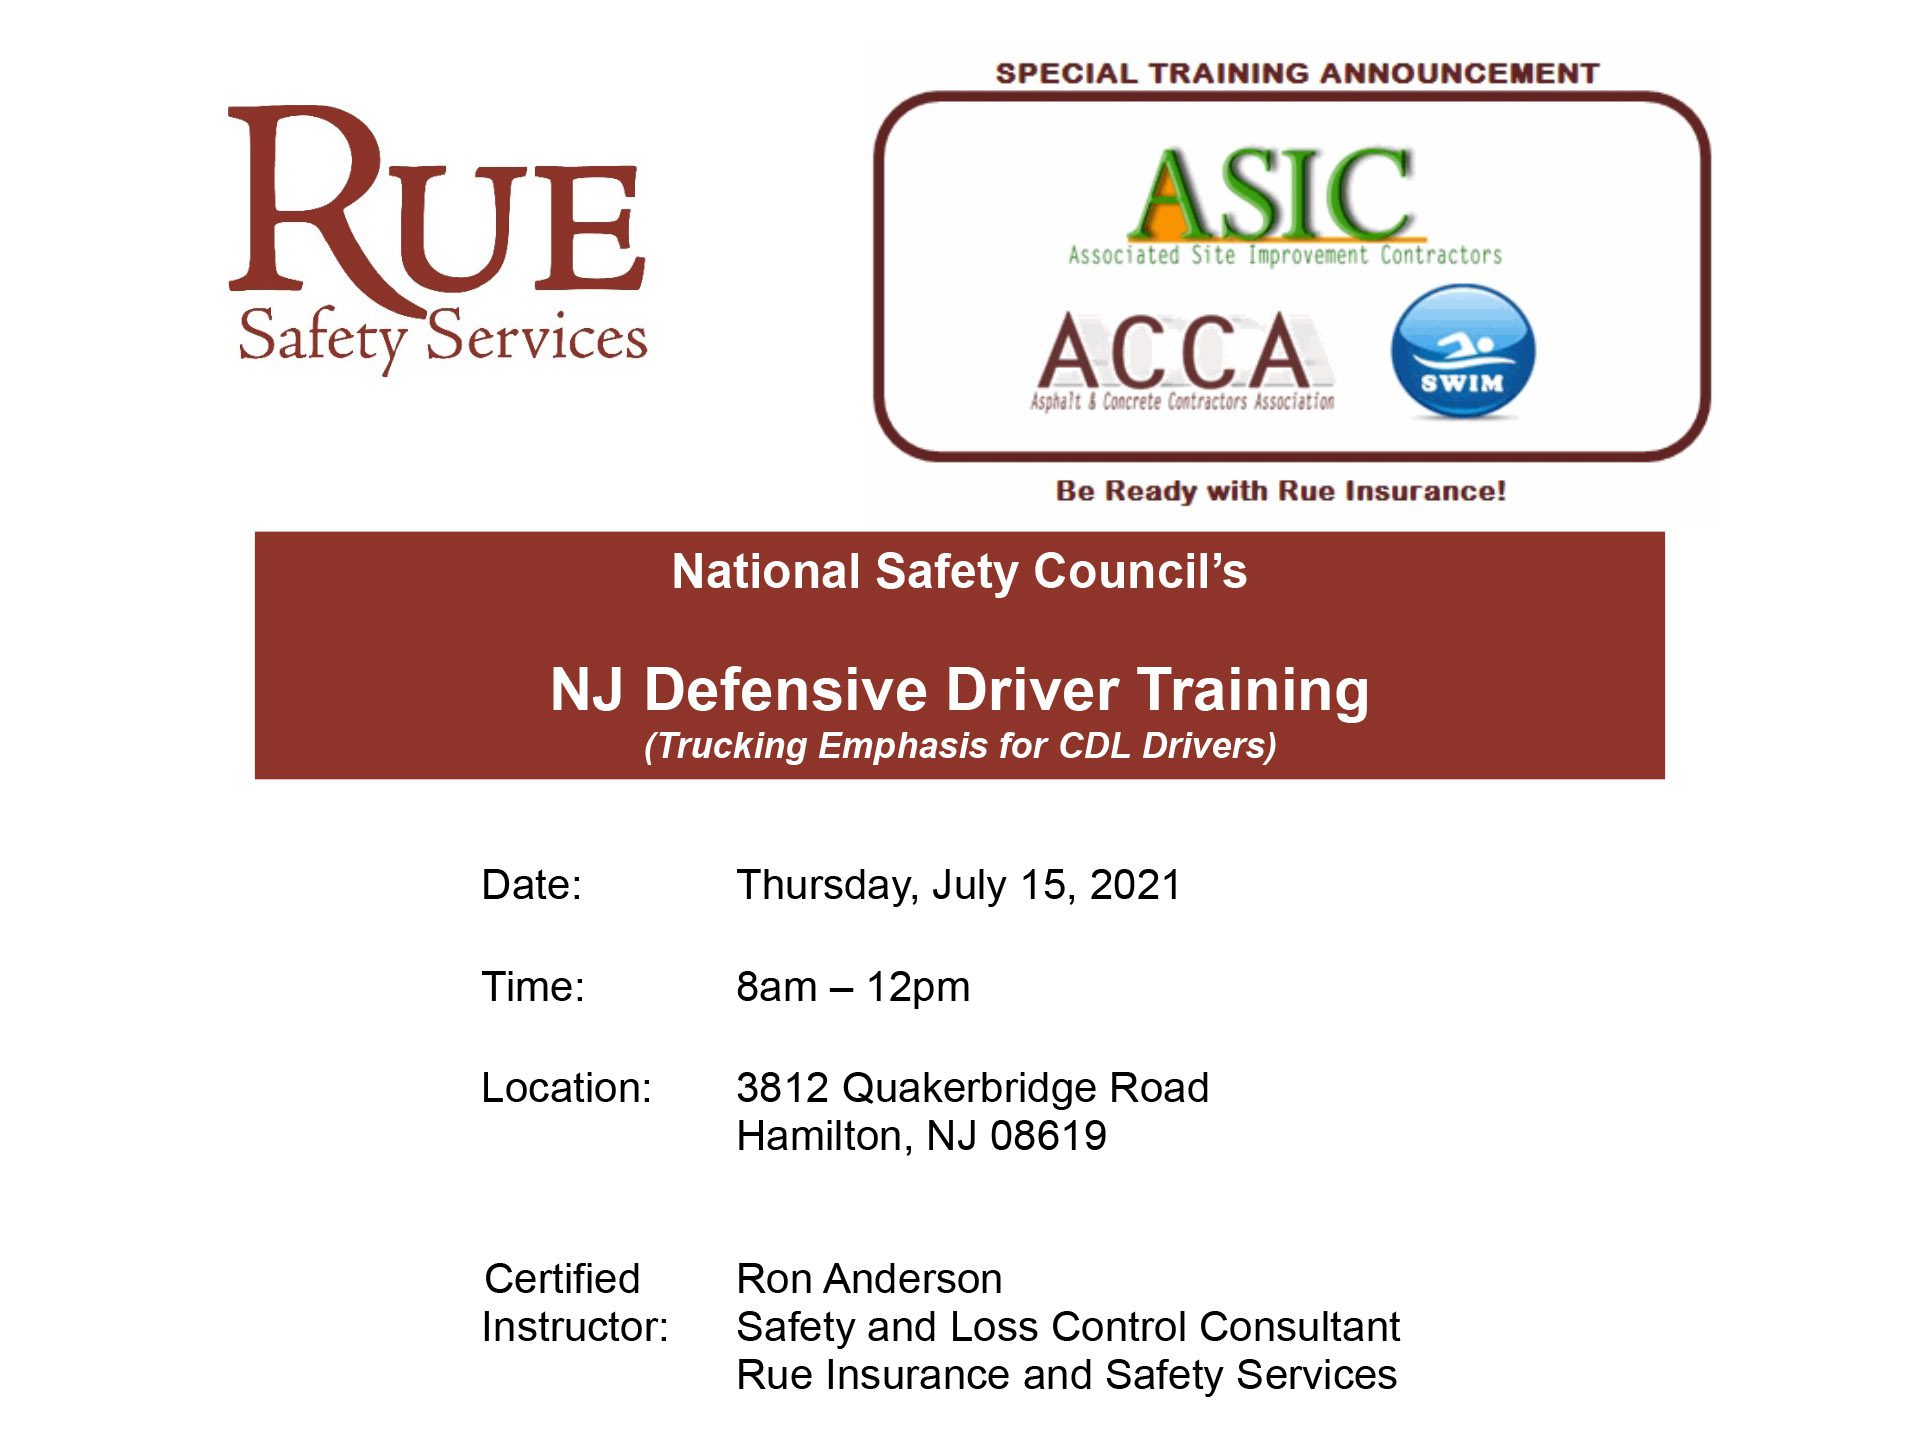 NJ Defensive Driving Training - DDC4 Program Invitation 7-15-21 -